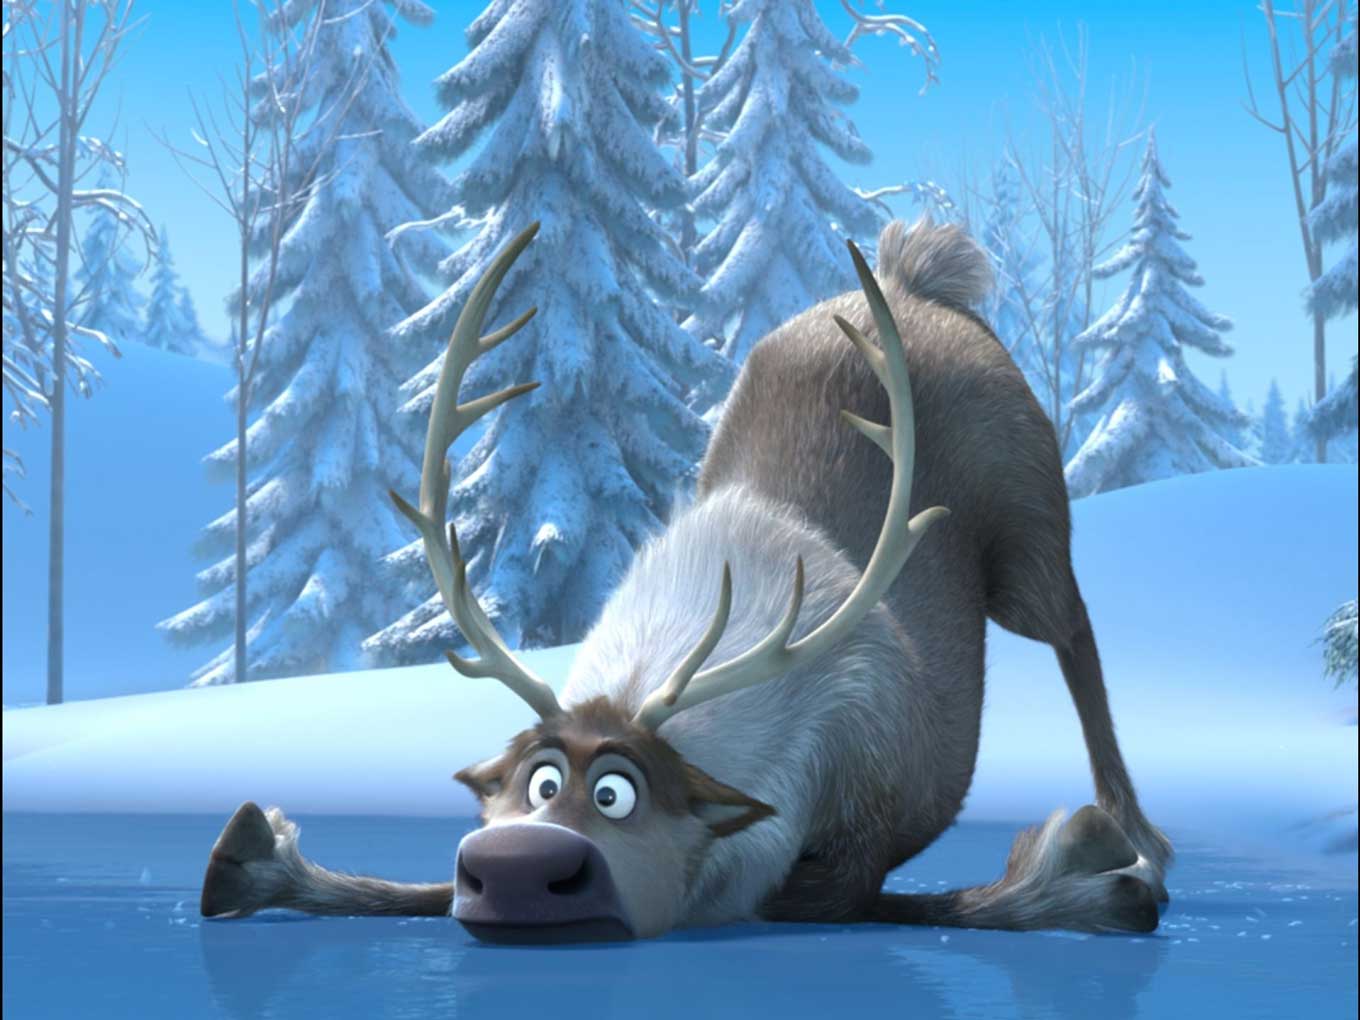 Disney Frozen Wallpapers Desktop Backgrounds Free HD Frozen Movie